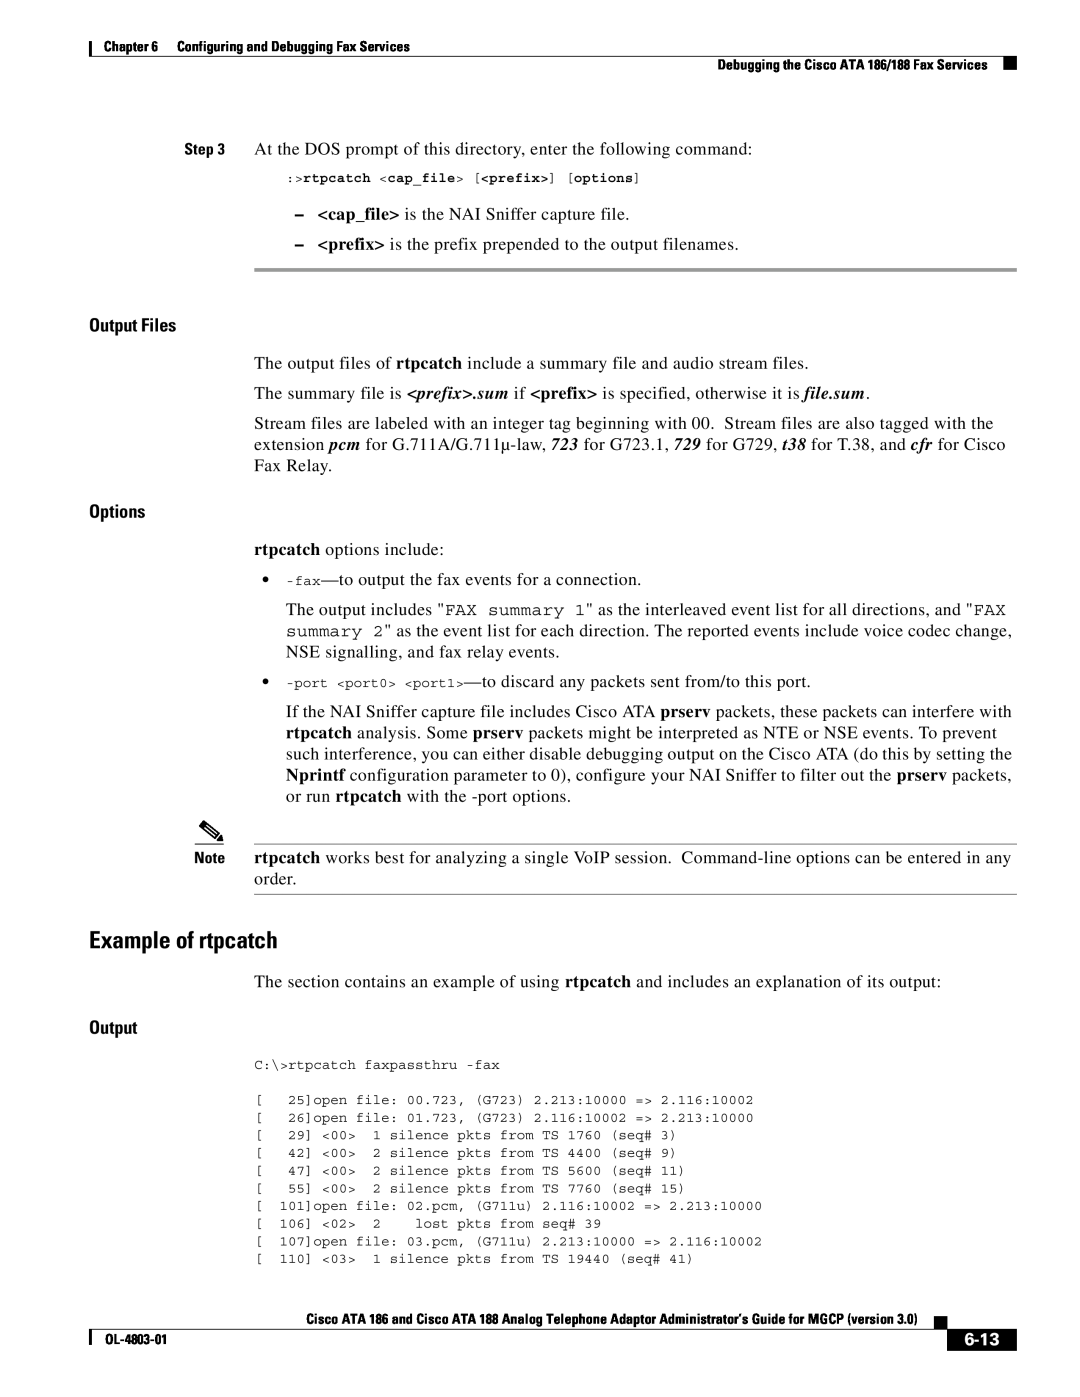 Cisco Systems ATA 188, ATA 186 manual Example of rtpcatch, Output Files, Options, 6-13 